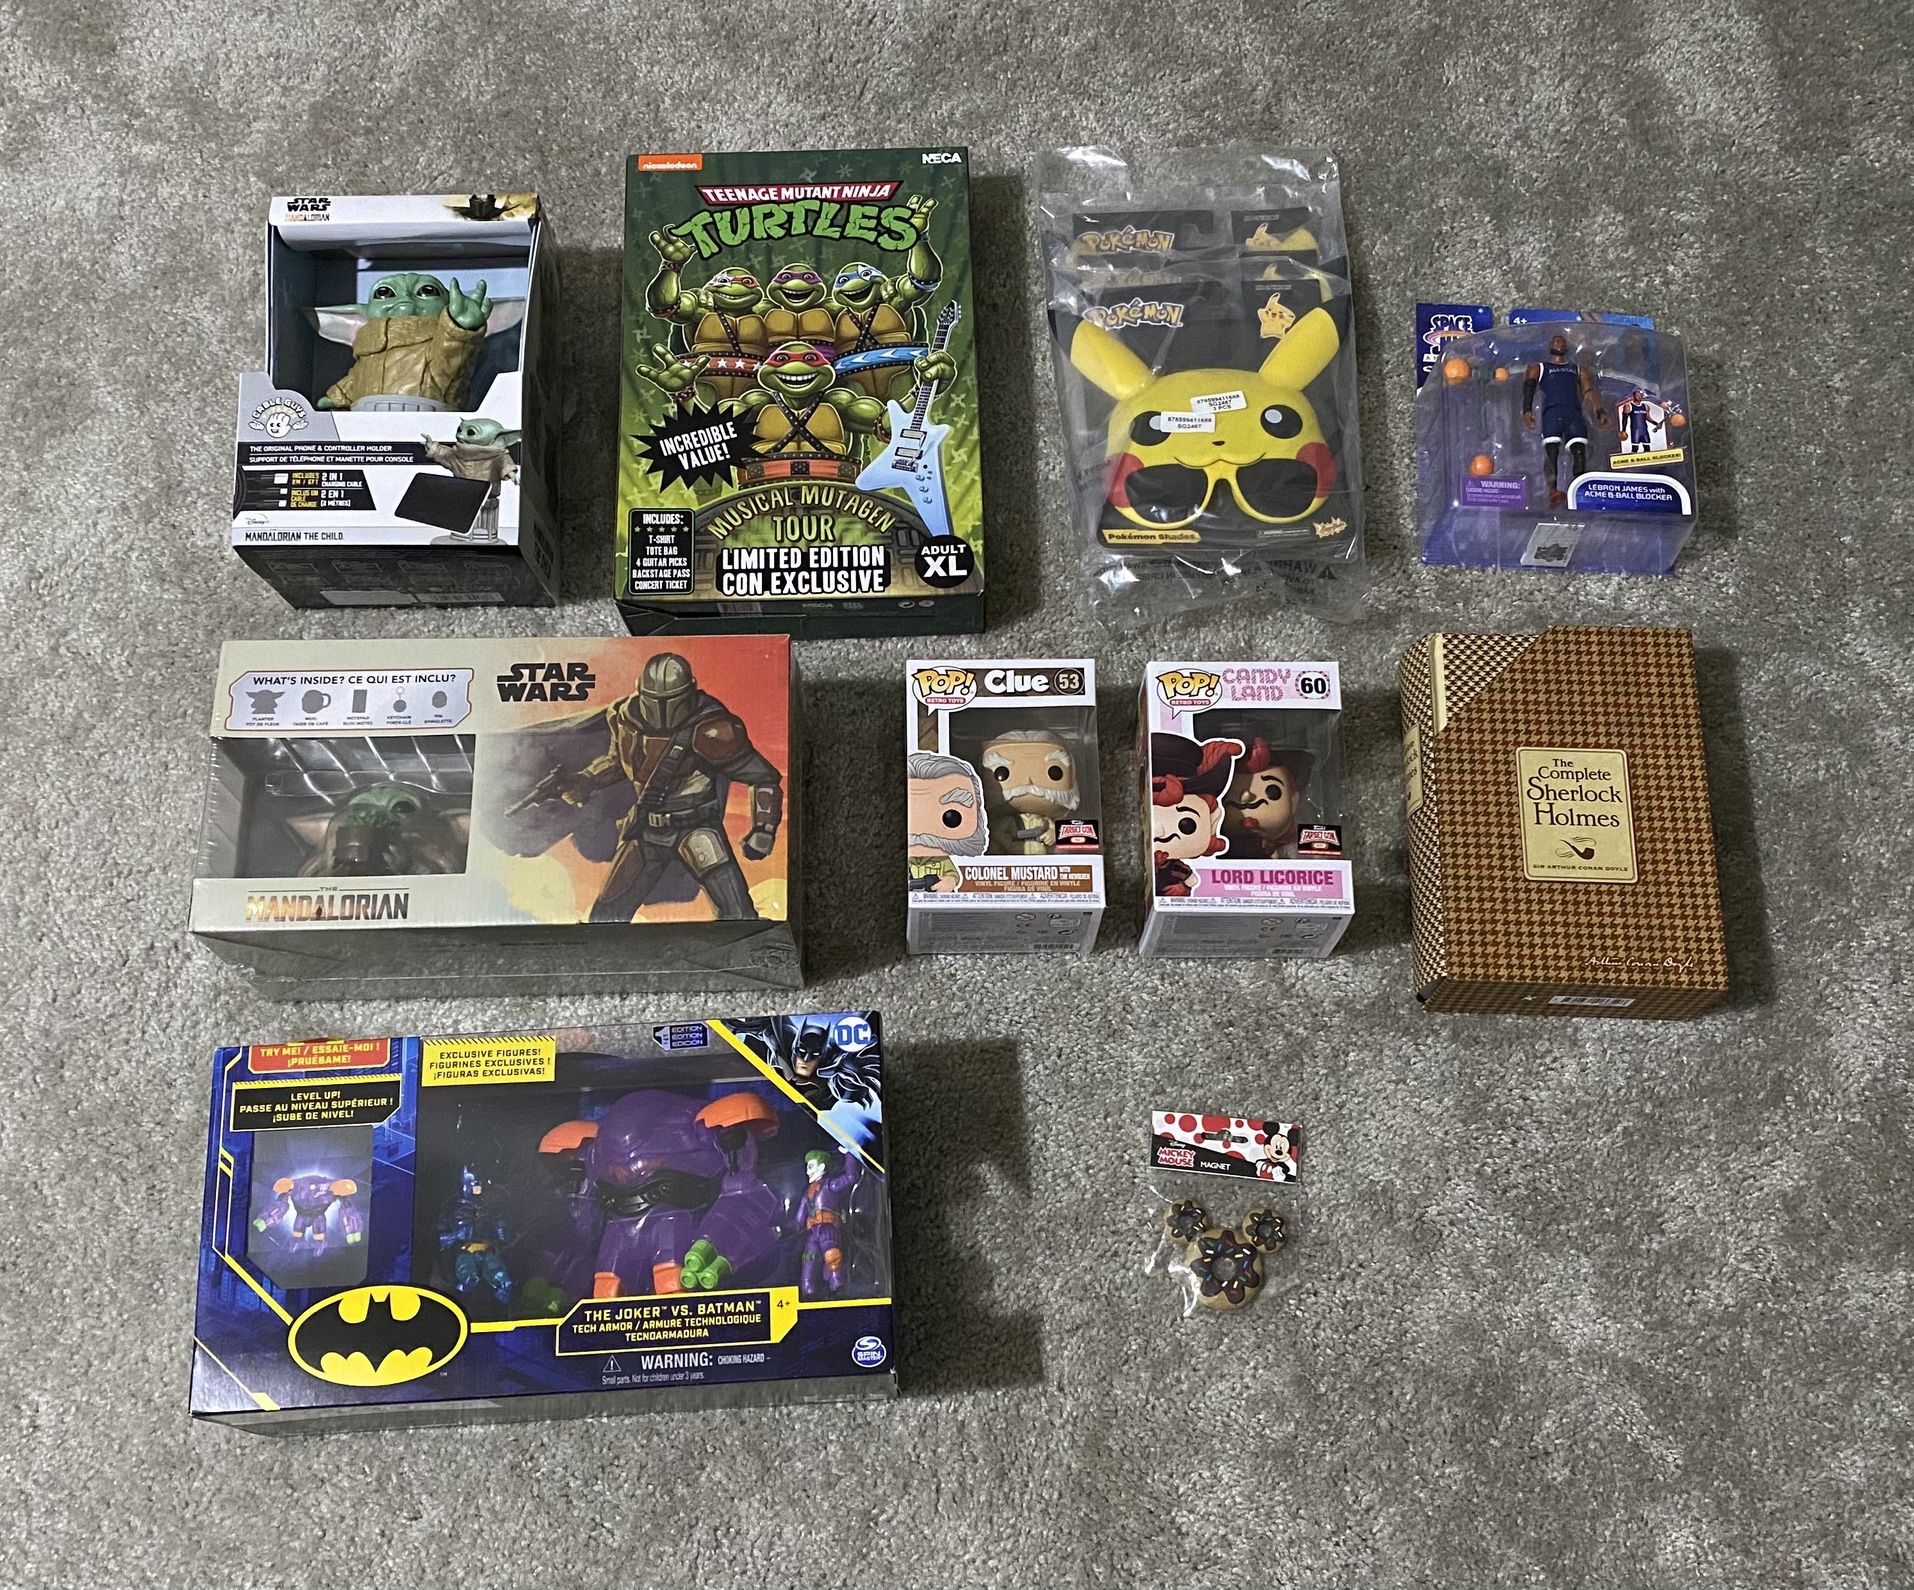 Assorted Lot Multiple Toys/Collectibles - Funko Pop, Ninja Turtles, Star Wars, Pikachu, Batman, Joker, Sherlock Holmes, Disney Magnet - Brand New